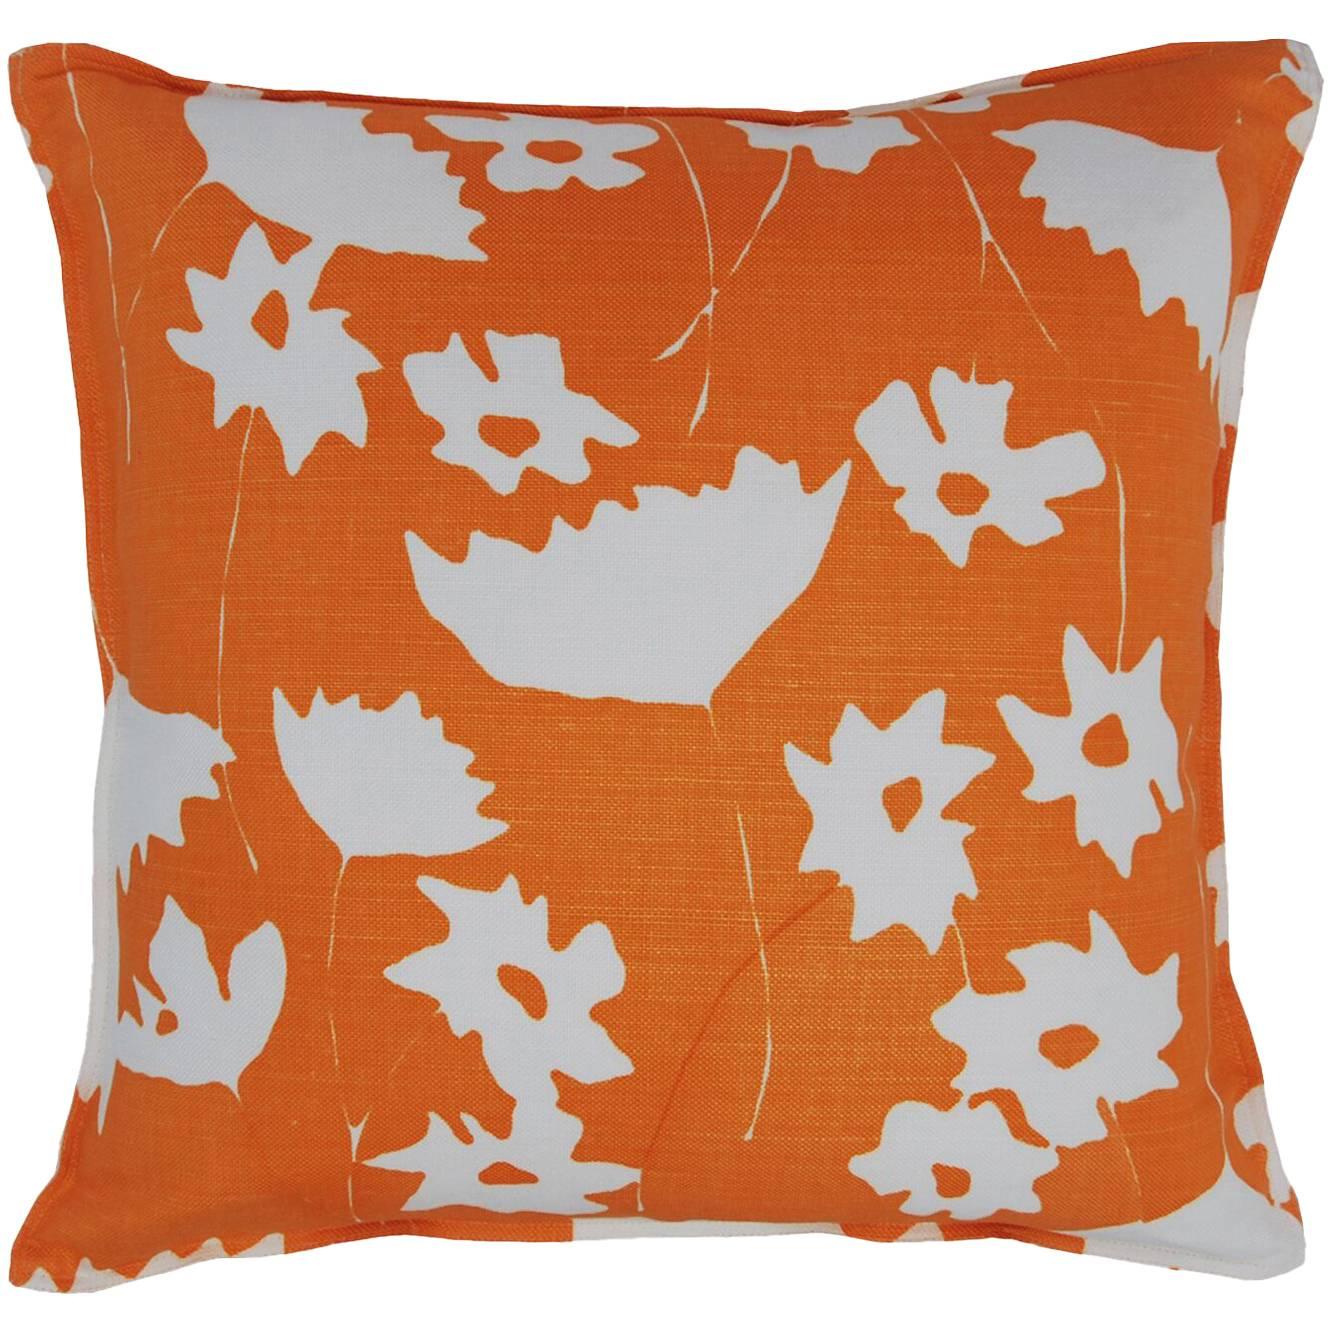 Pumpkin Cosmos on Wheat Cotton Linen Pillow For Sale